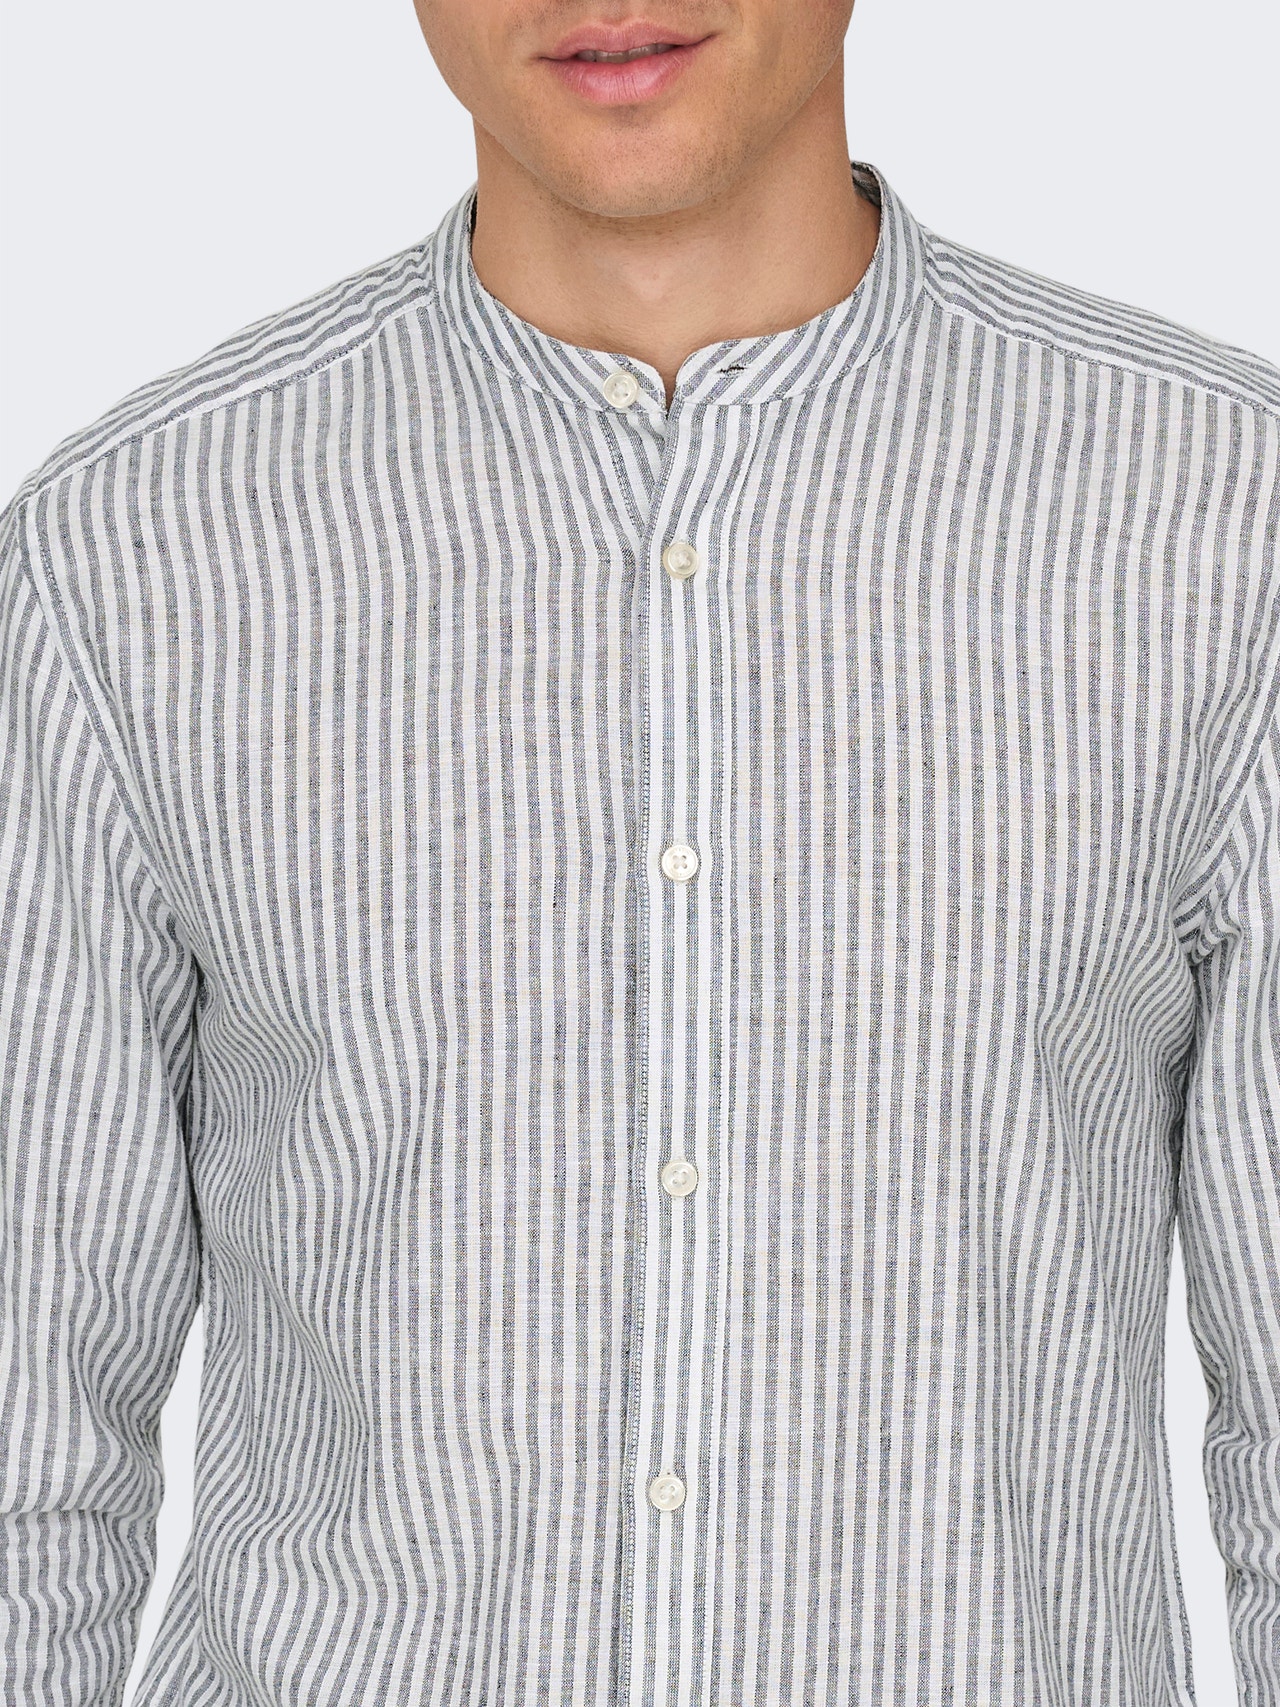 ONLY & SONS Slim Fit Shirt collar Shirt -Dark Navy - 22026602